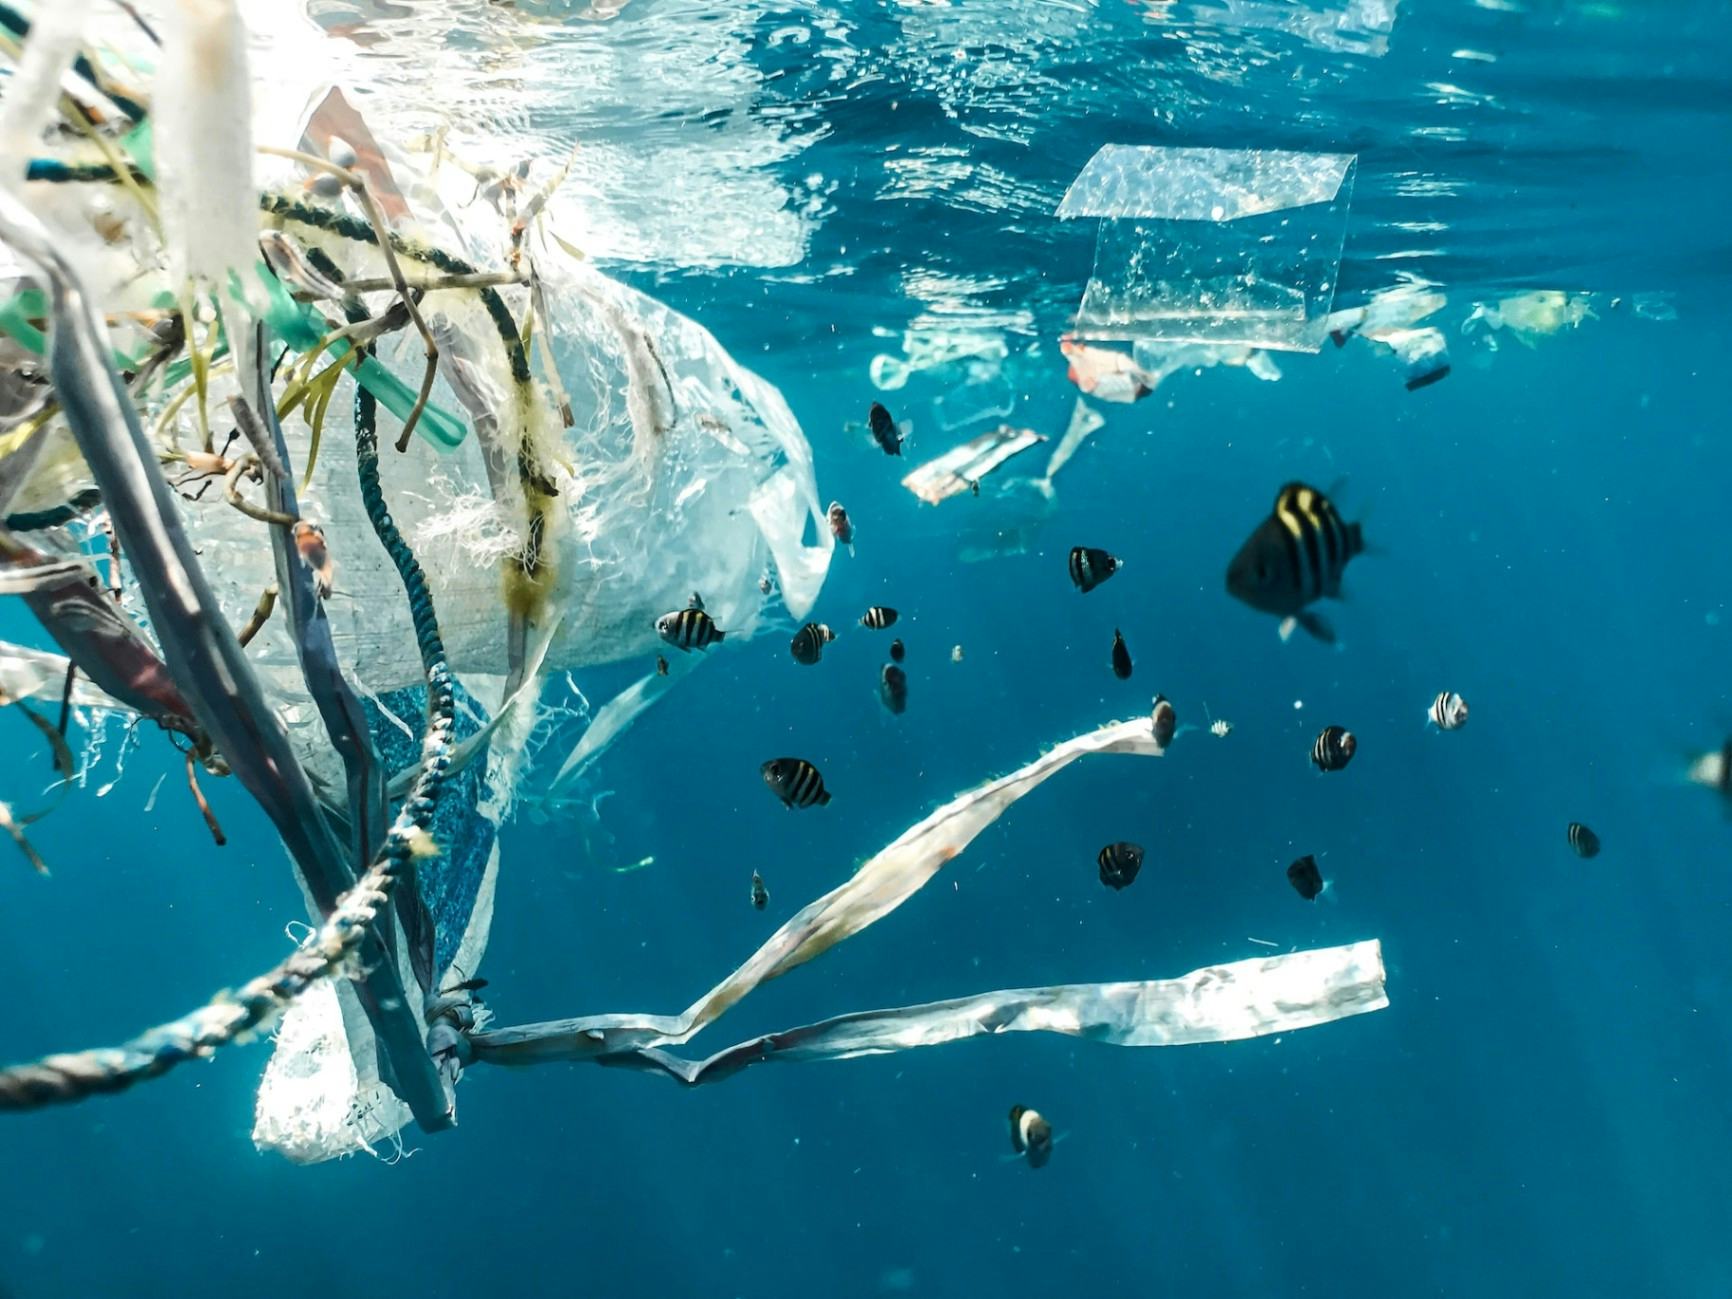 Addressing the global plastic problem